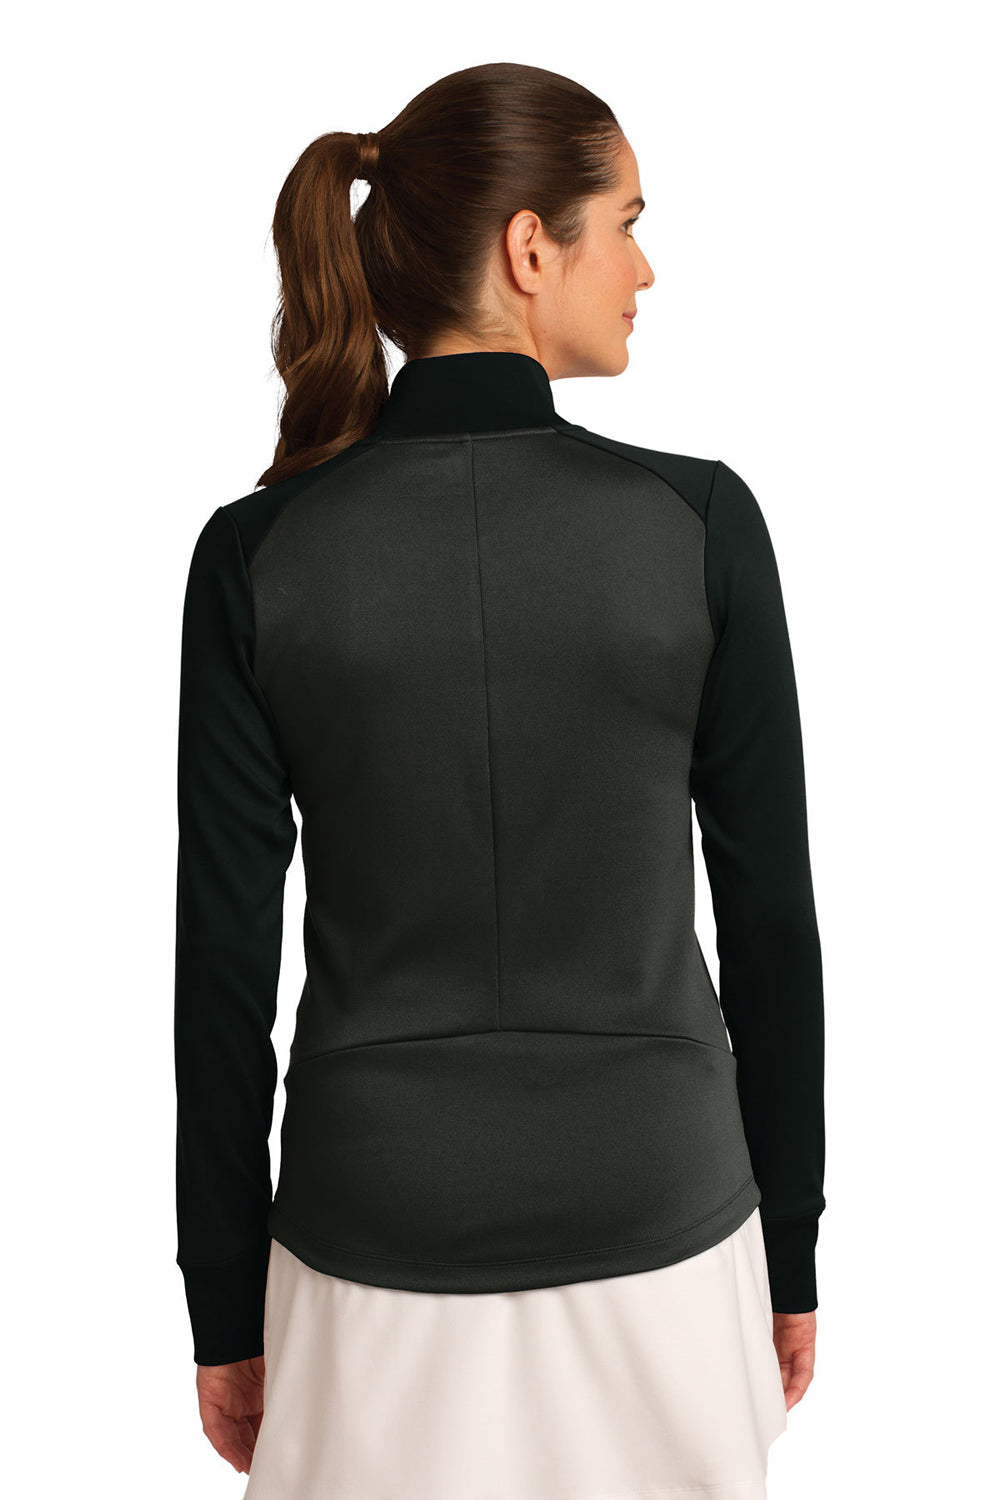 Nike 578674 Womens Dri-Fit Moisture Wicking 1/4 Zip Sweatshirt Anthracite Grey/Black Model Back